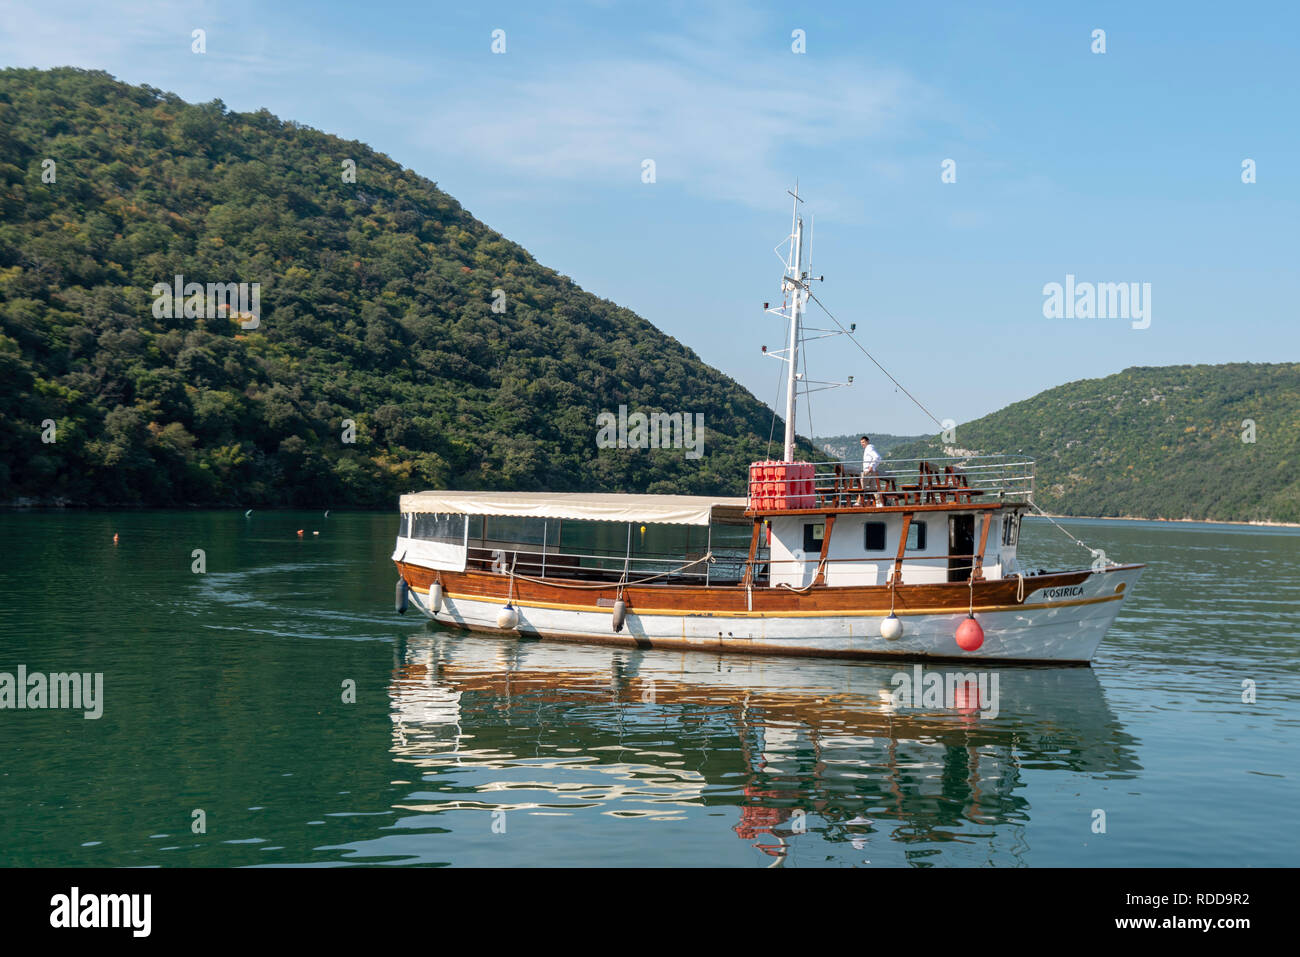 A fishing boat on the Limski Canal, Istria, Croatia Stock Photo